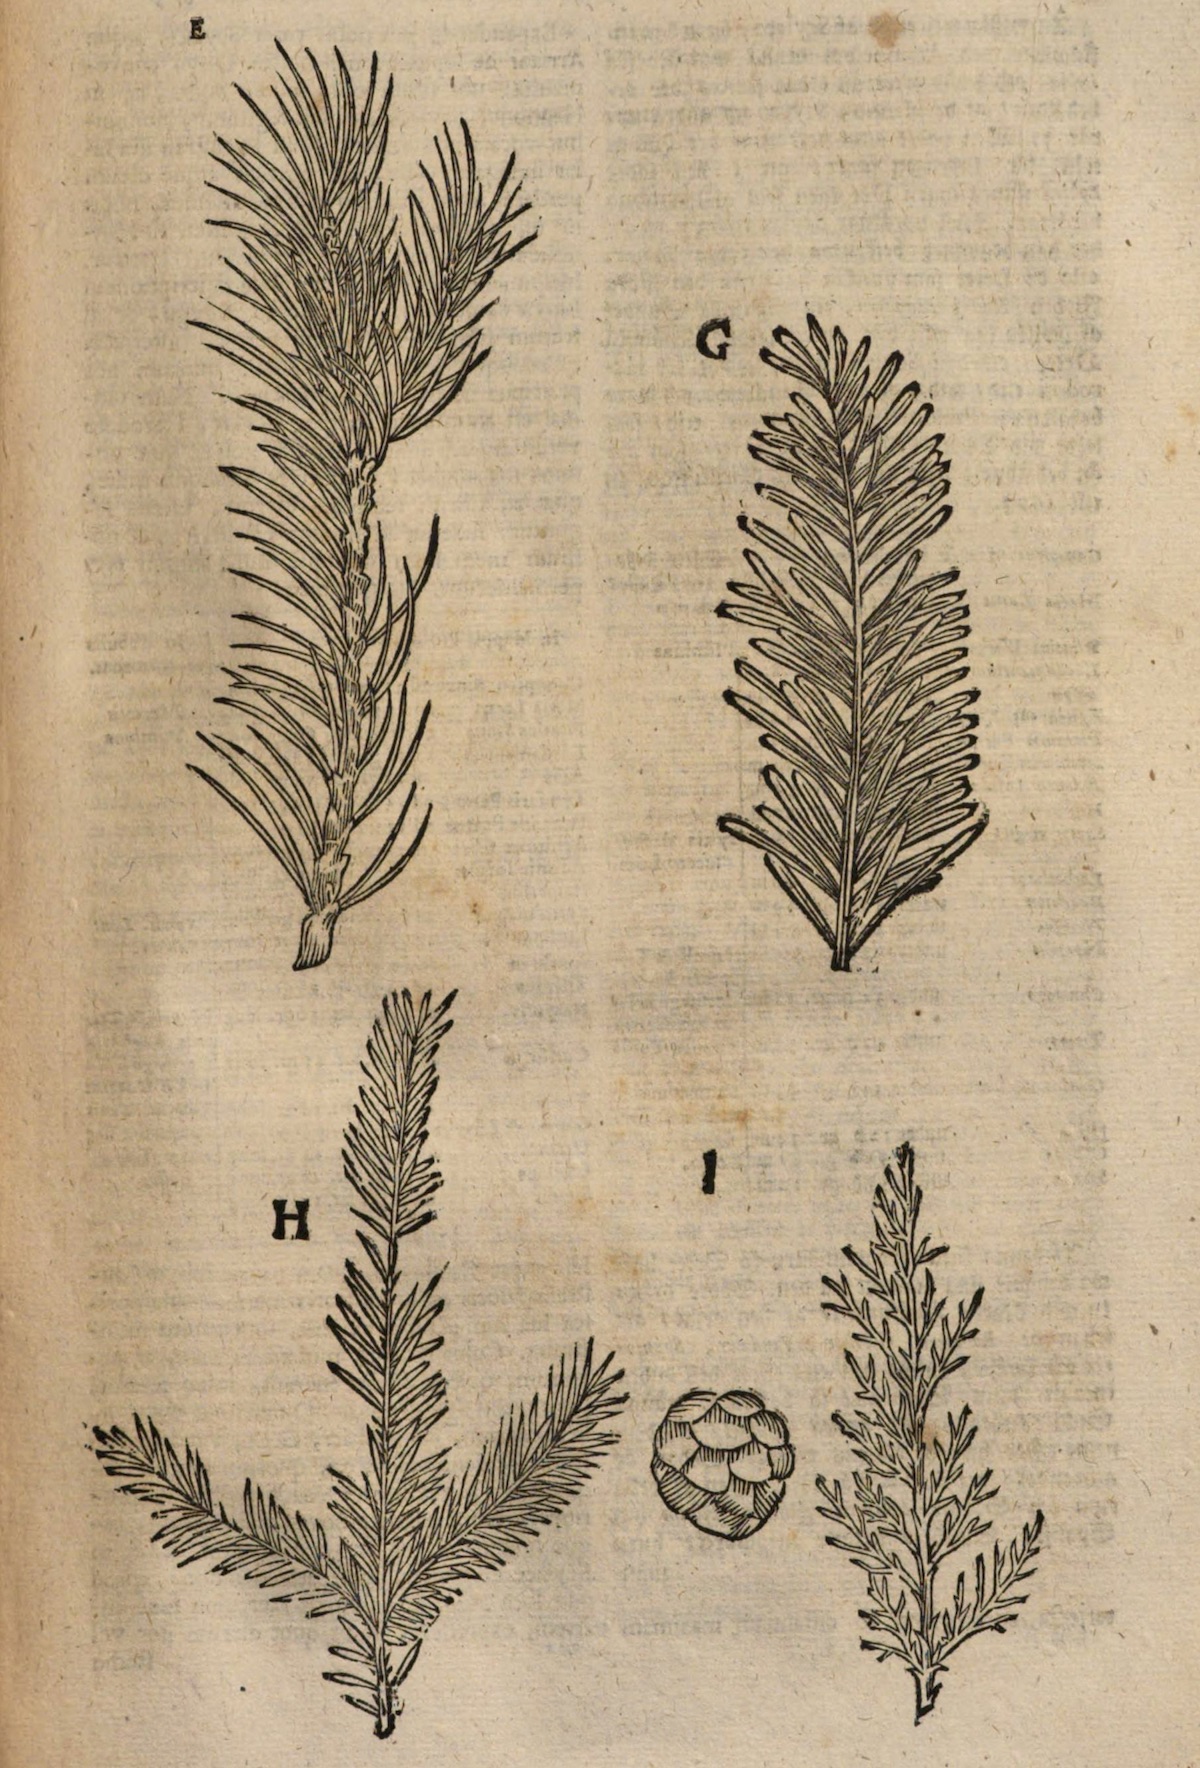 Illustrations of conifer twigs